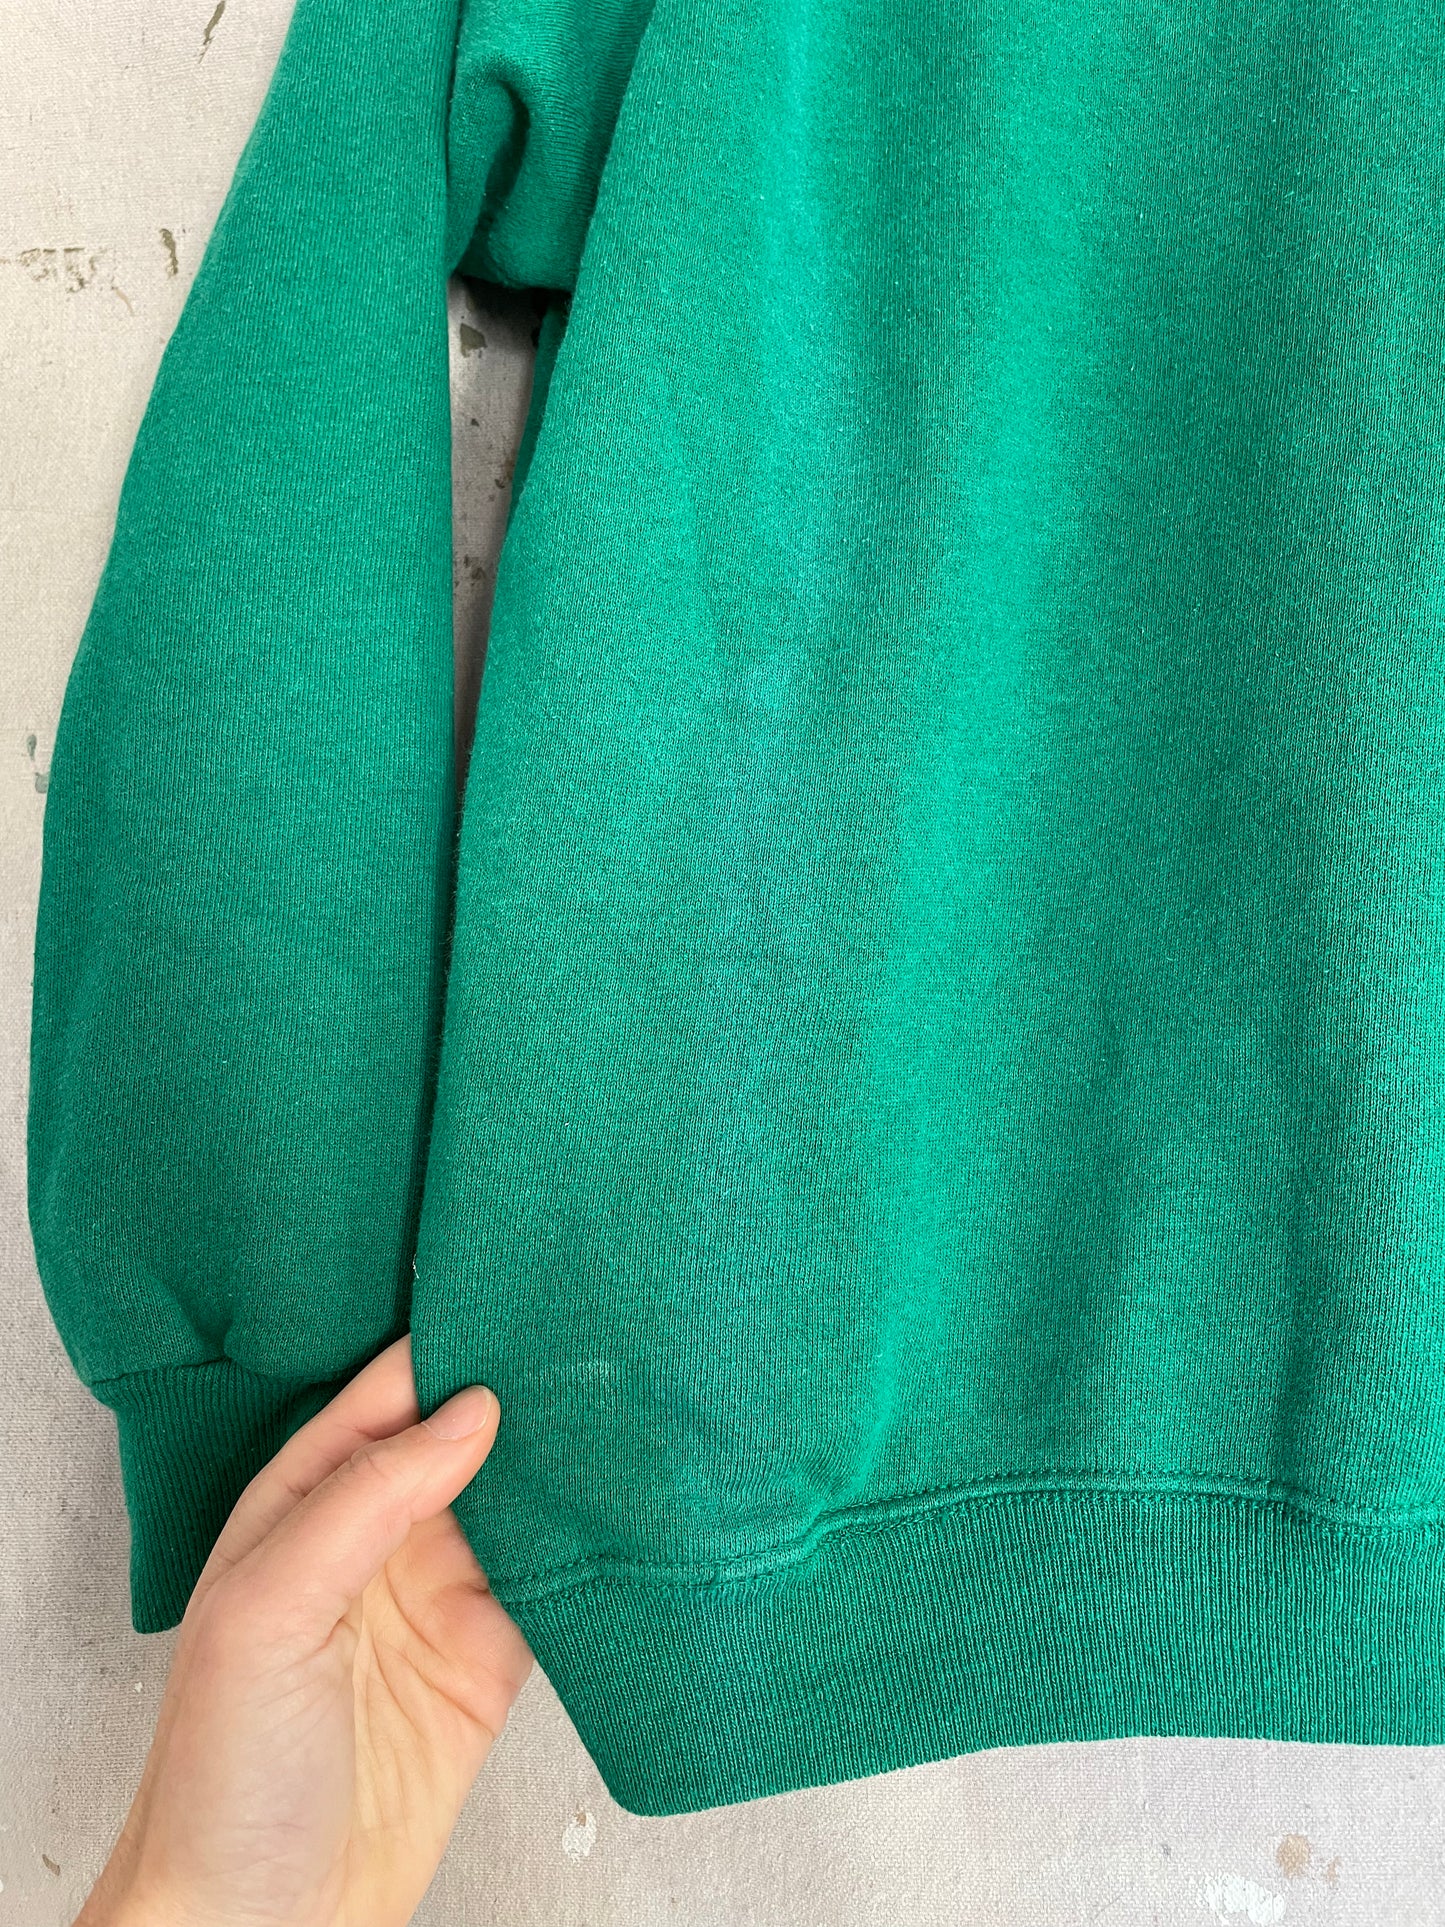 80s Hanes Blank Green Sweatshirt